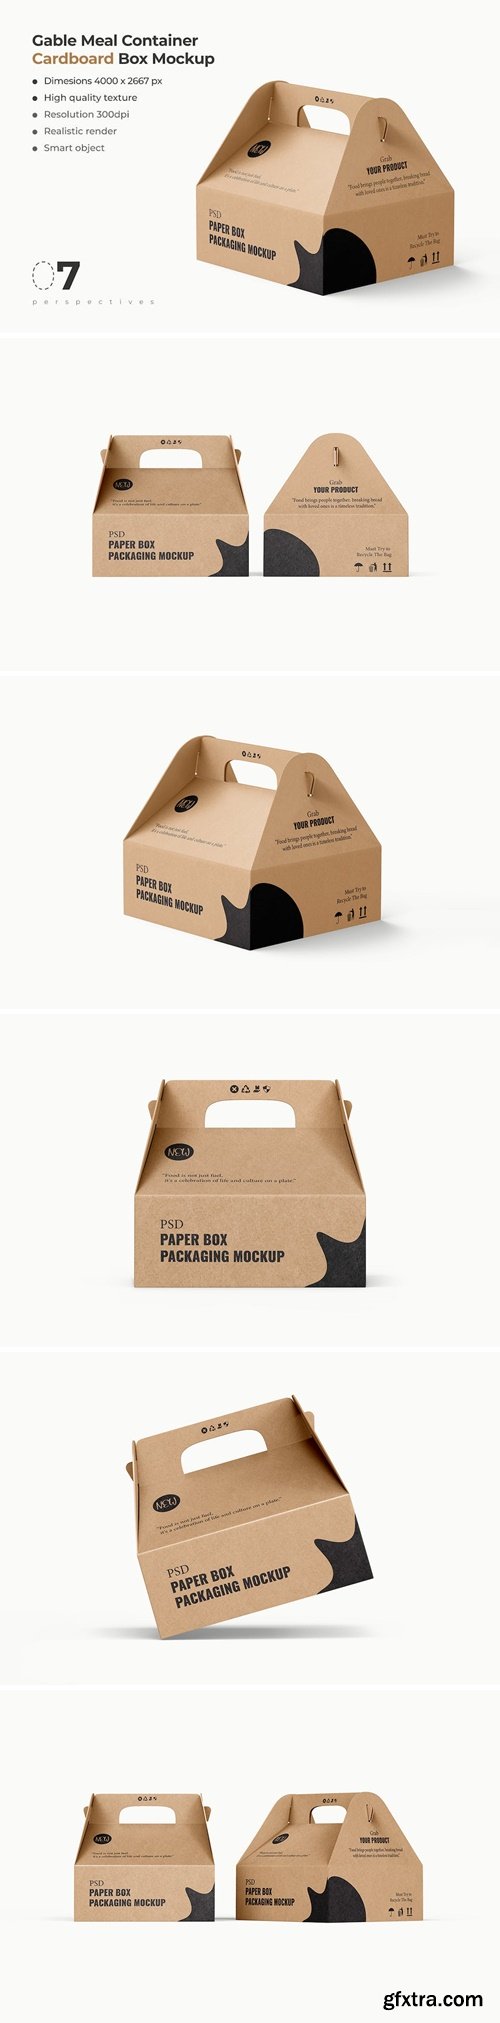 Gable Meal Food Carry Handle Cardboard Box Mockup YL8AE4V